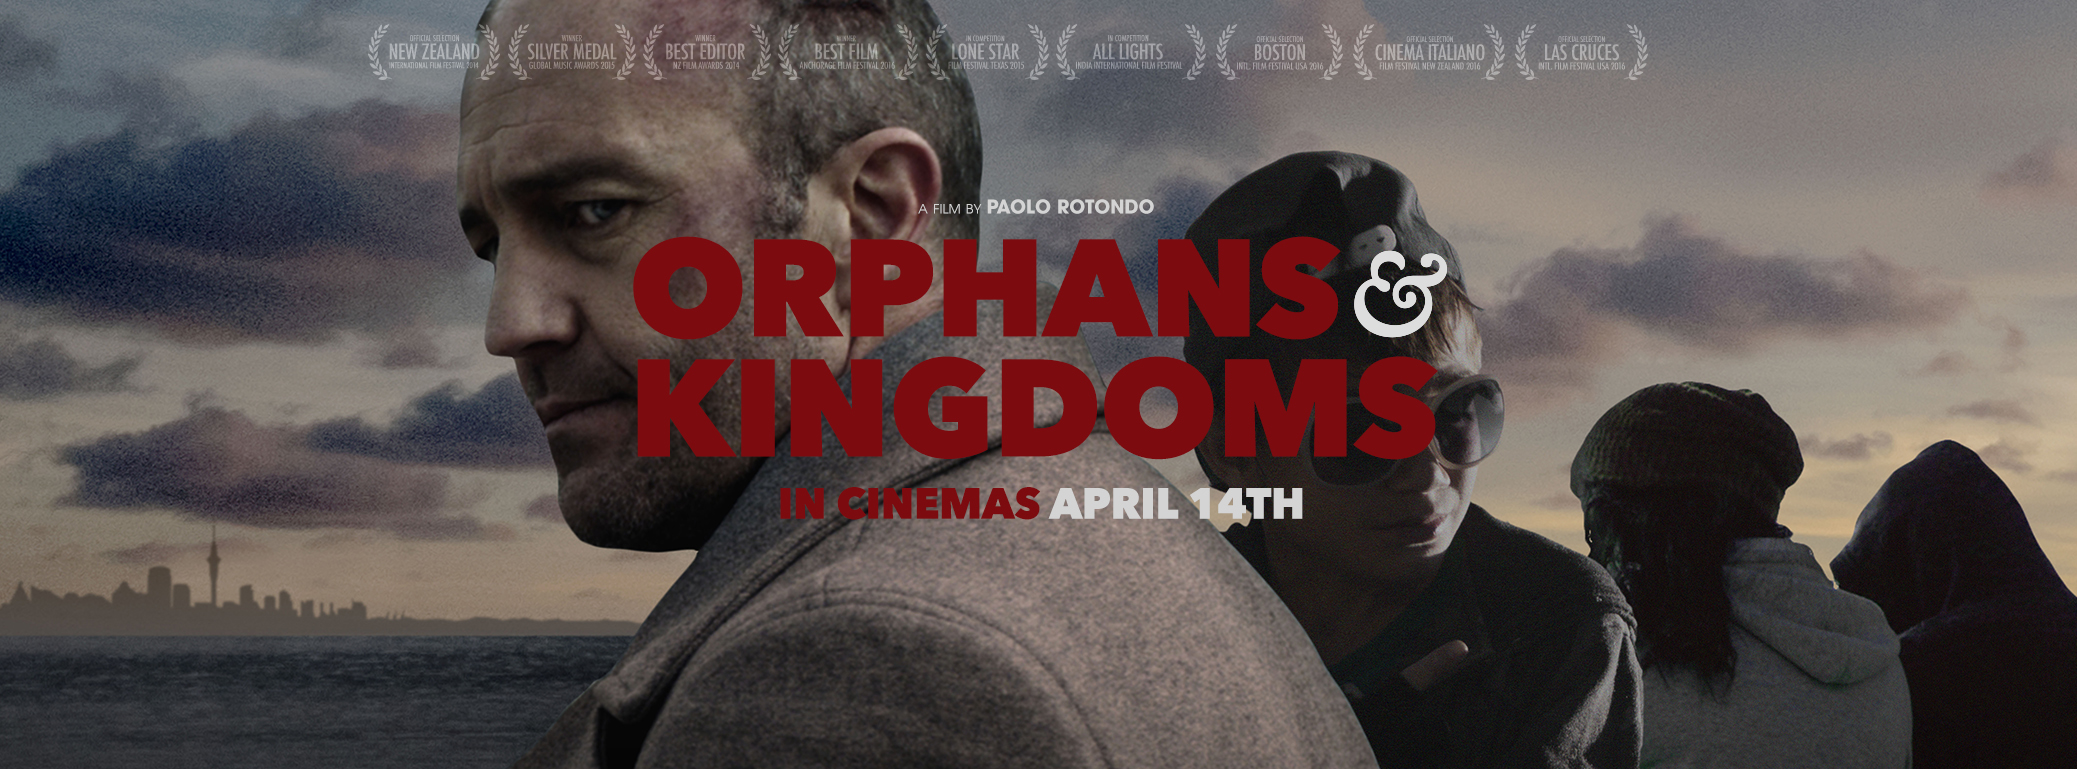 Orphans & Kingdoms